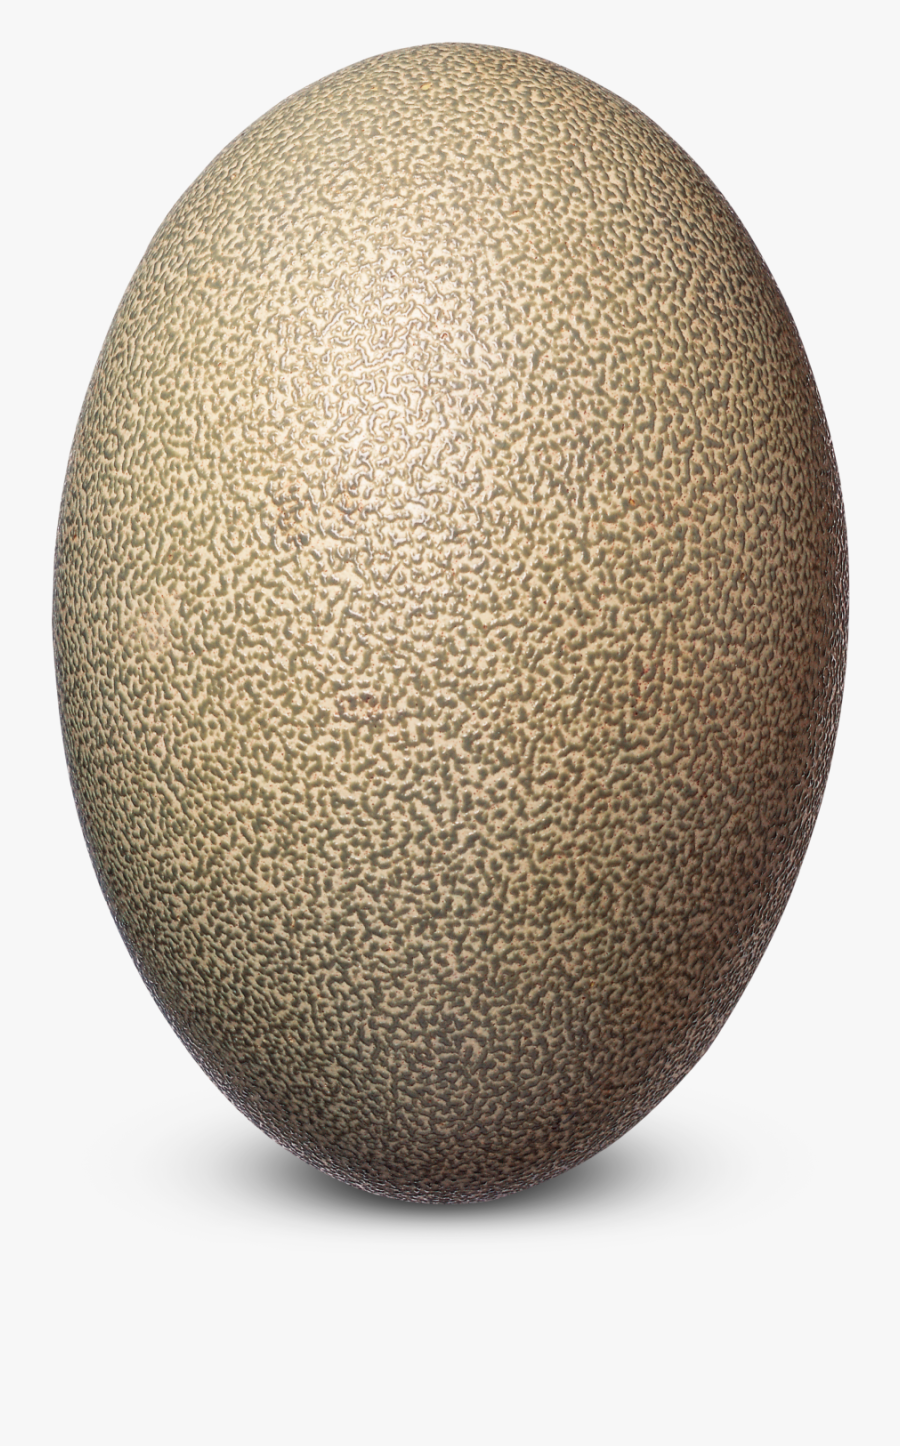 Clip Art Mockingbird Egg - Ostrich Egg Transparent, Transparent Clipart